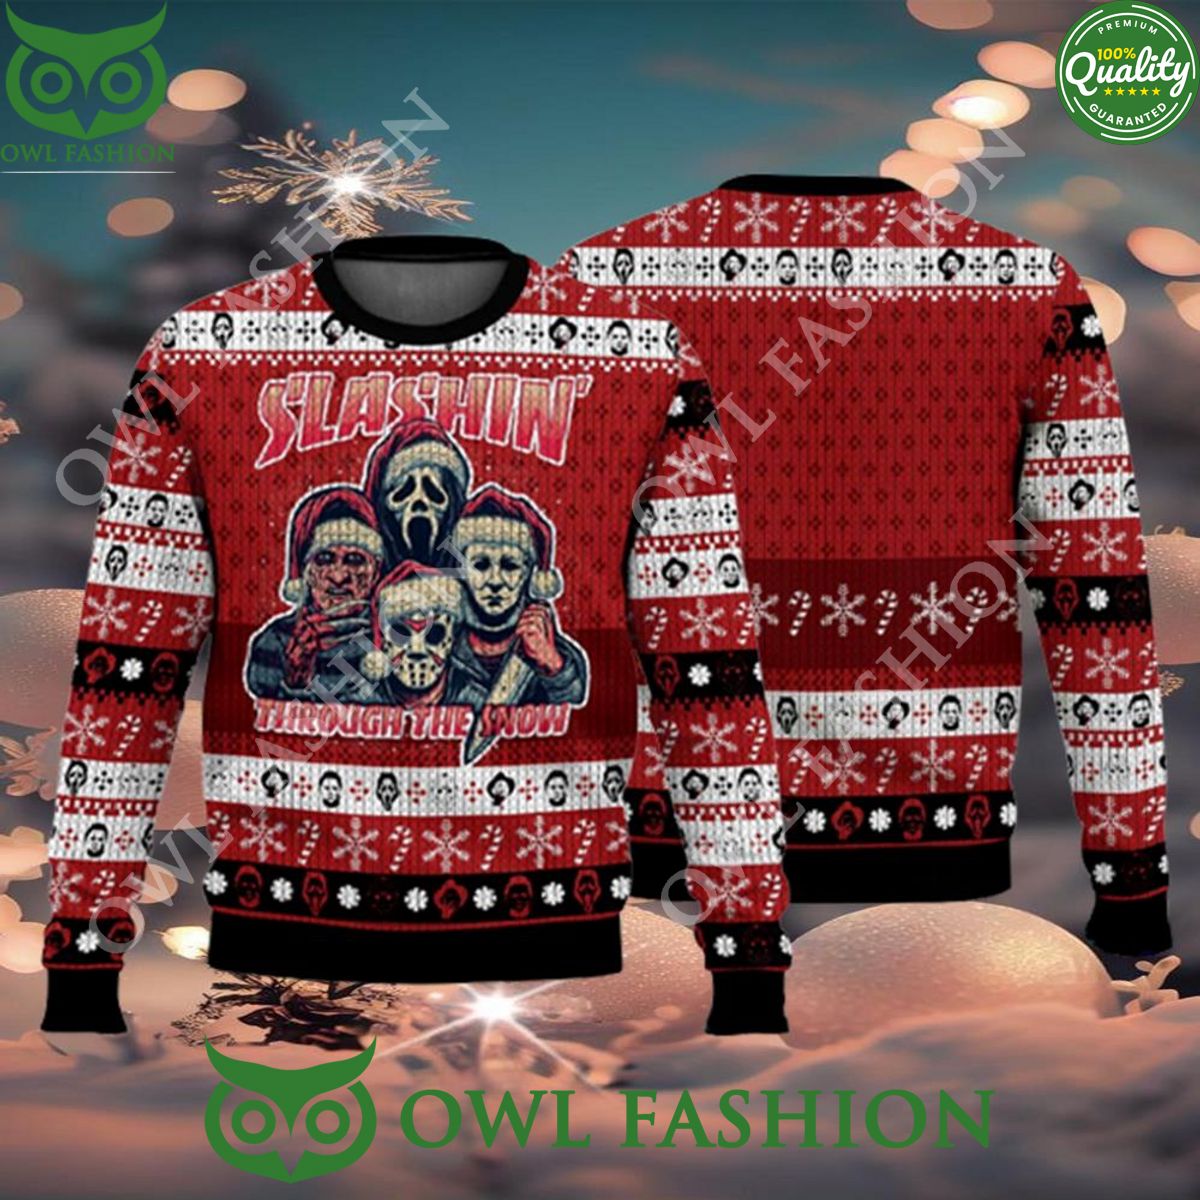 horror guys slashin through the snow christmas ugly christmas sweater jumper 1 vK0tJ.jpg